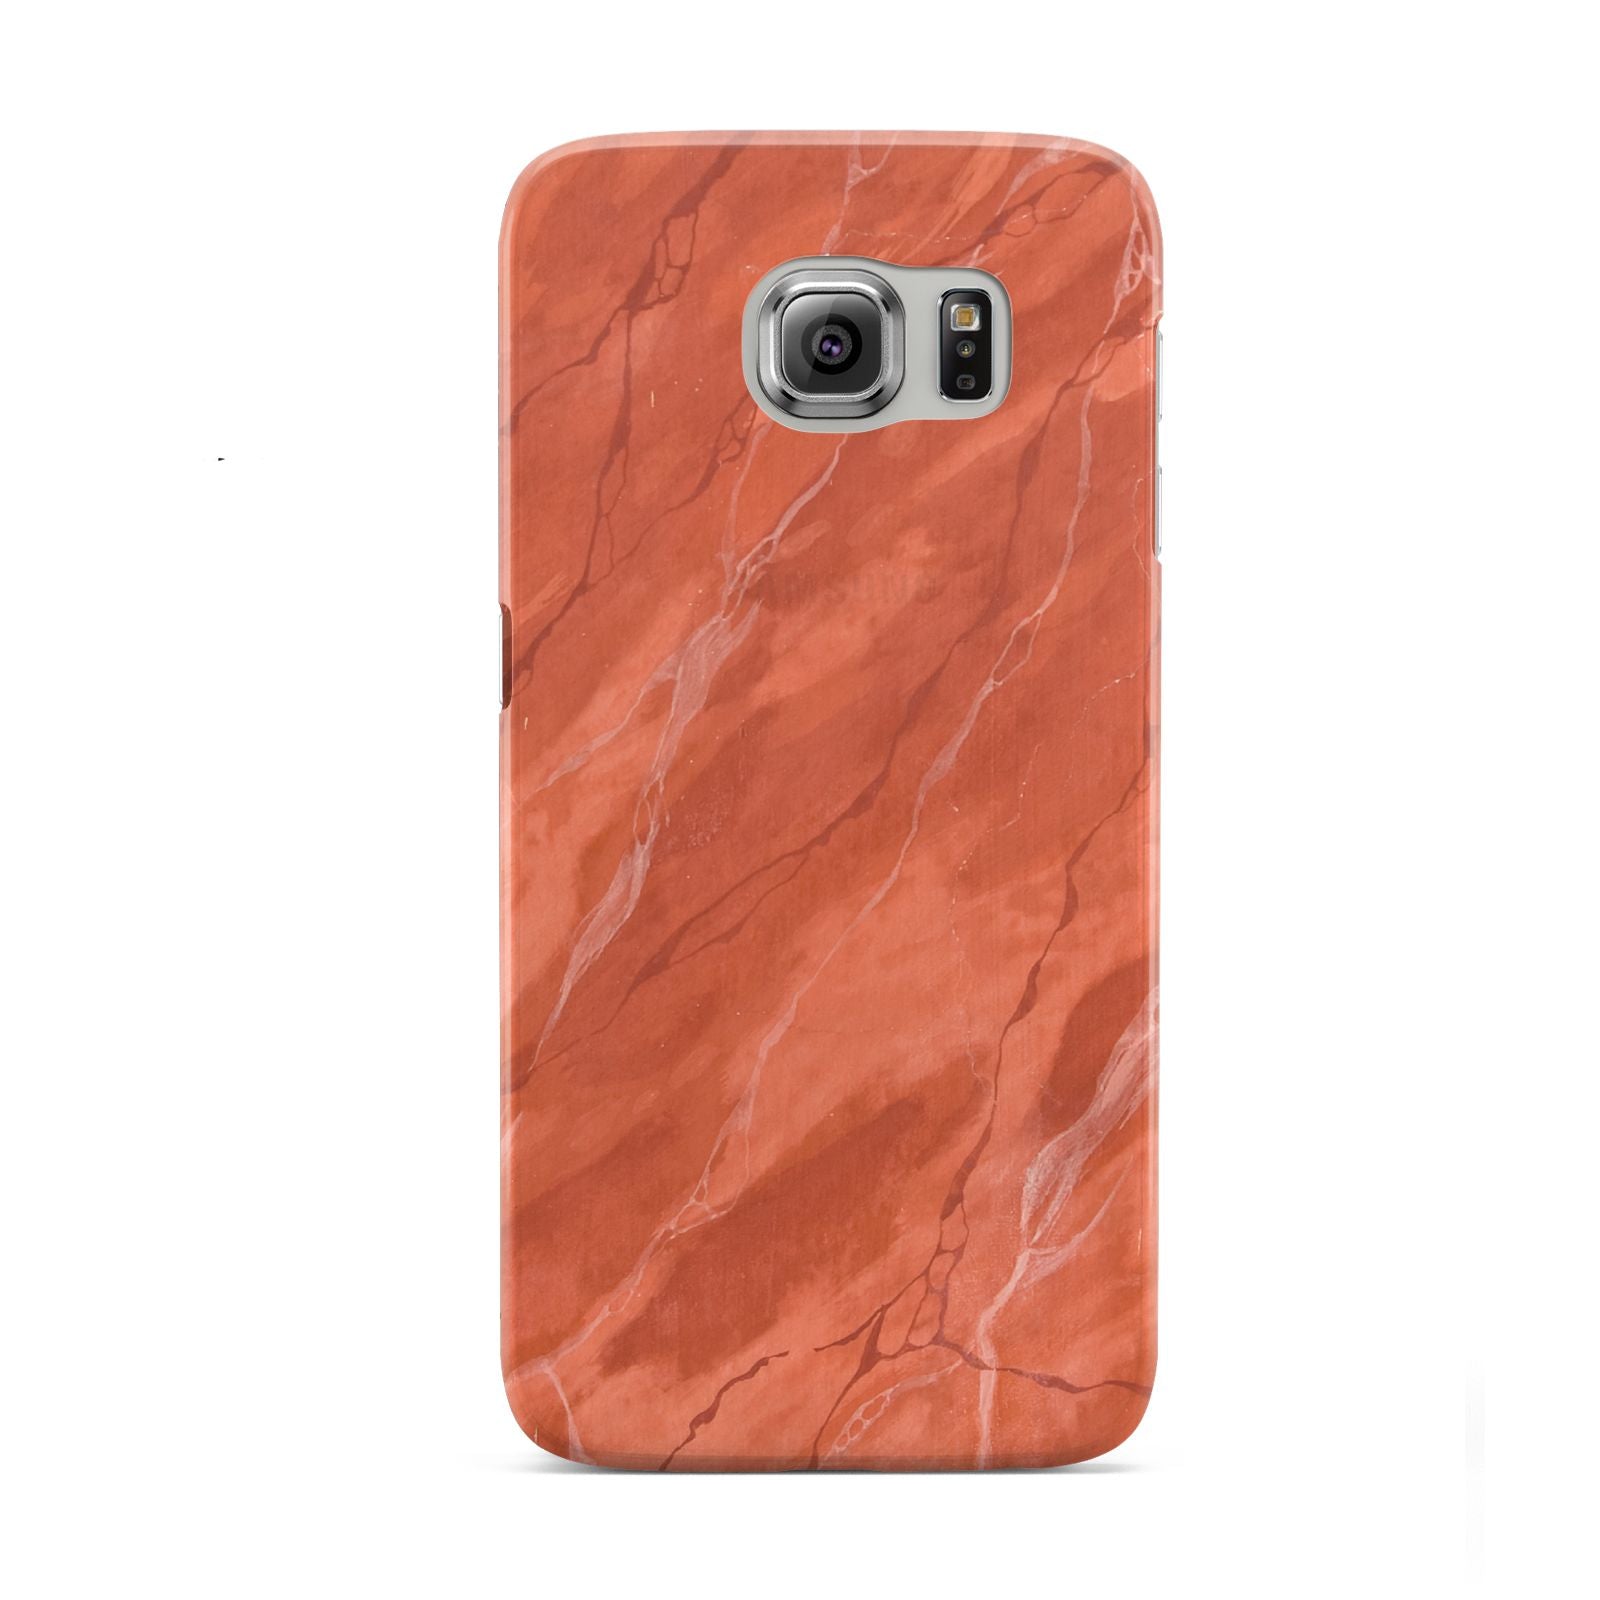 Faux Marble Red Orange Samsung Galaxy S6 Case